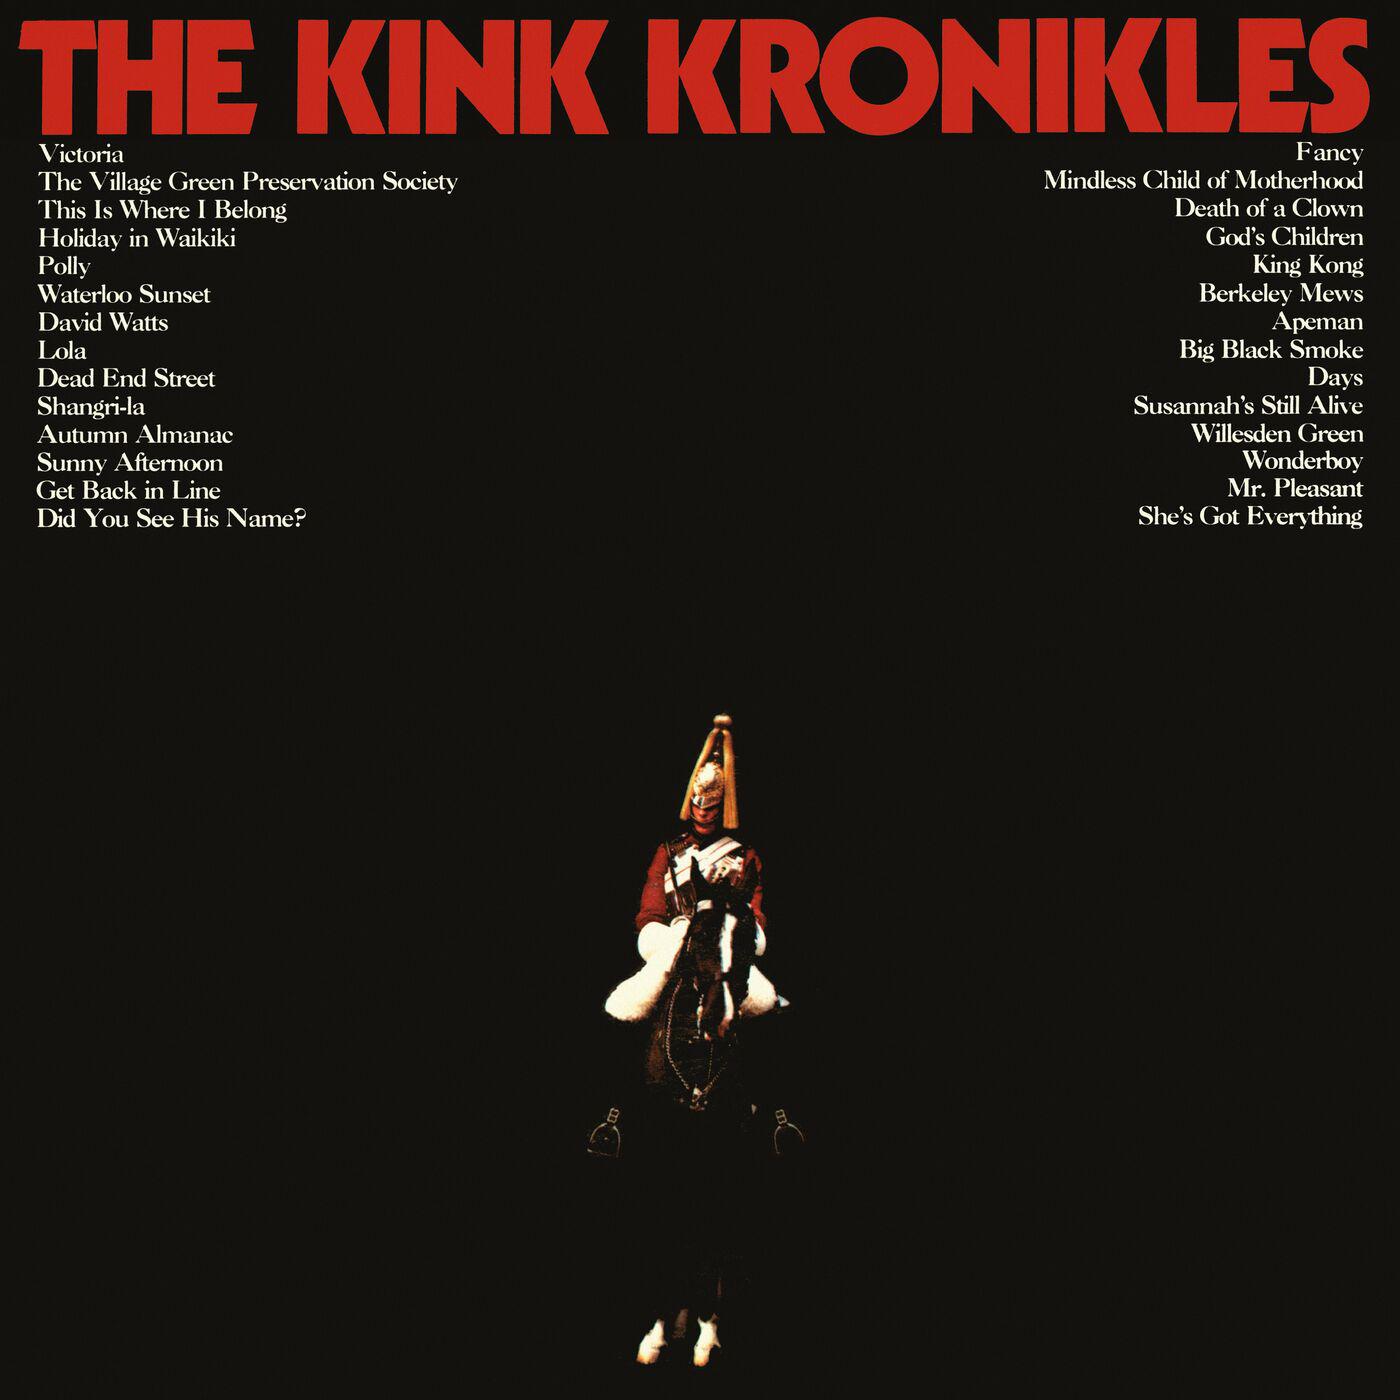 The Kinks-The Kink Kronikles-WEB-1972-ENRiCH iNT